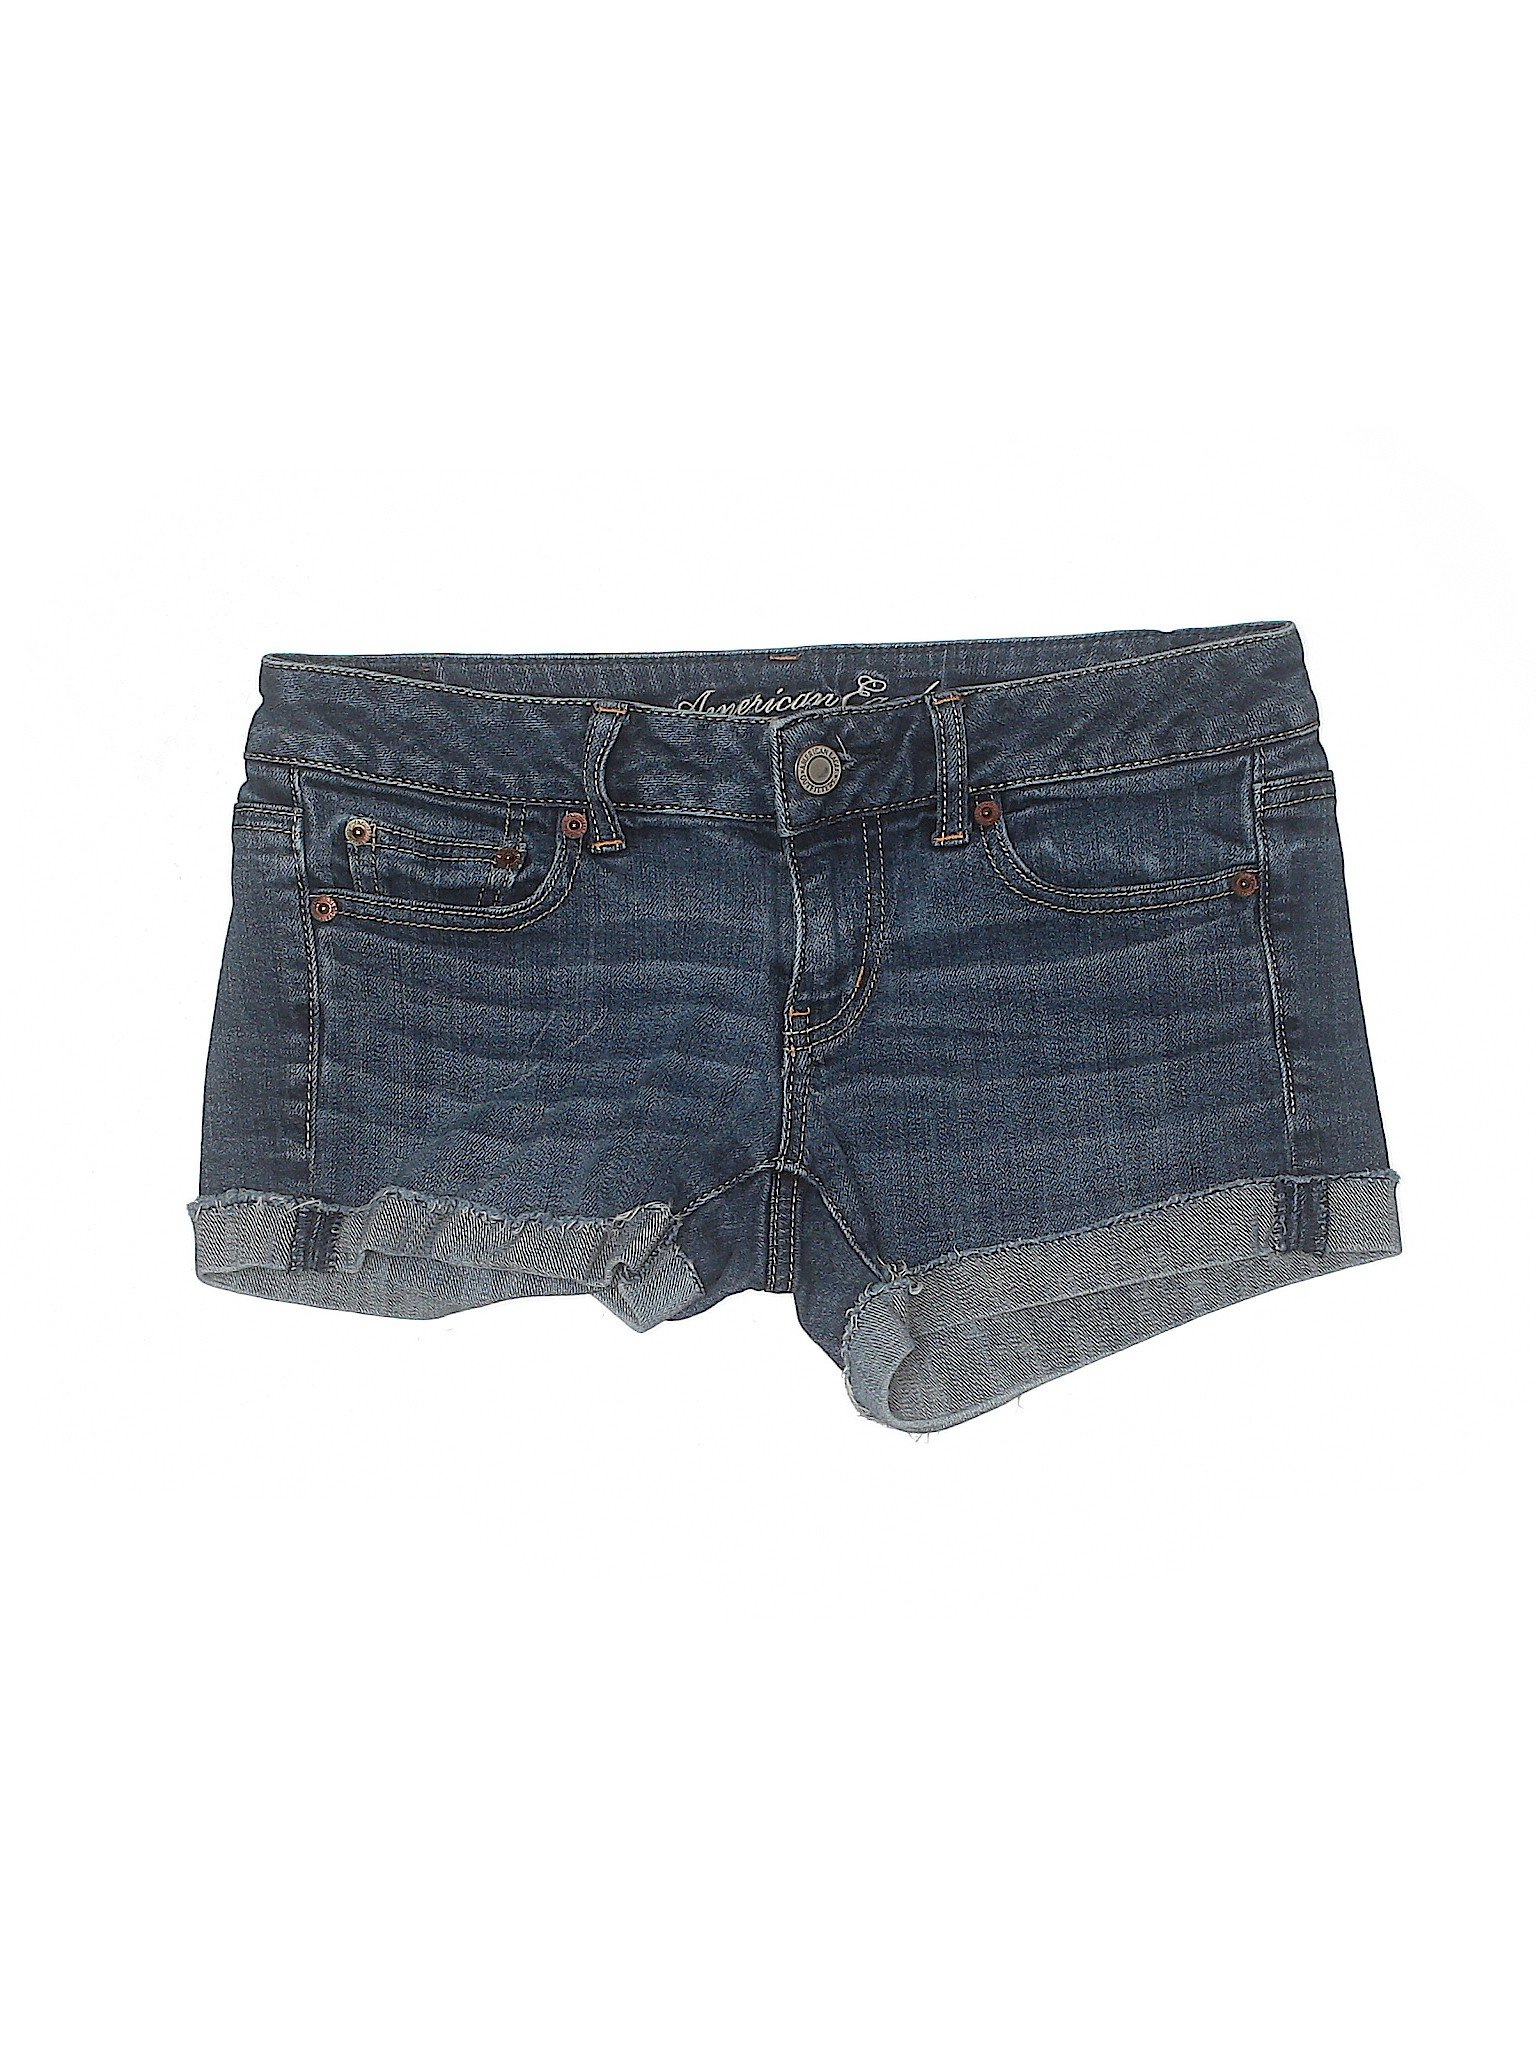 American Eagle Outfitters Women Blue Denim Shorts 2 | eBay